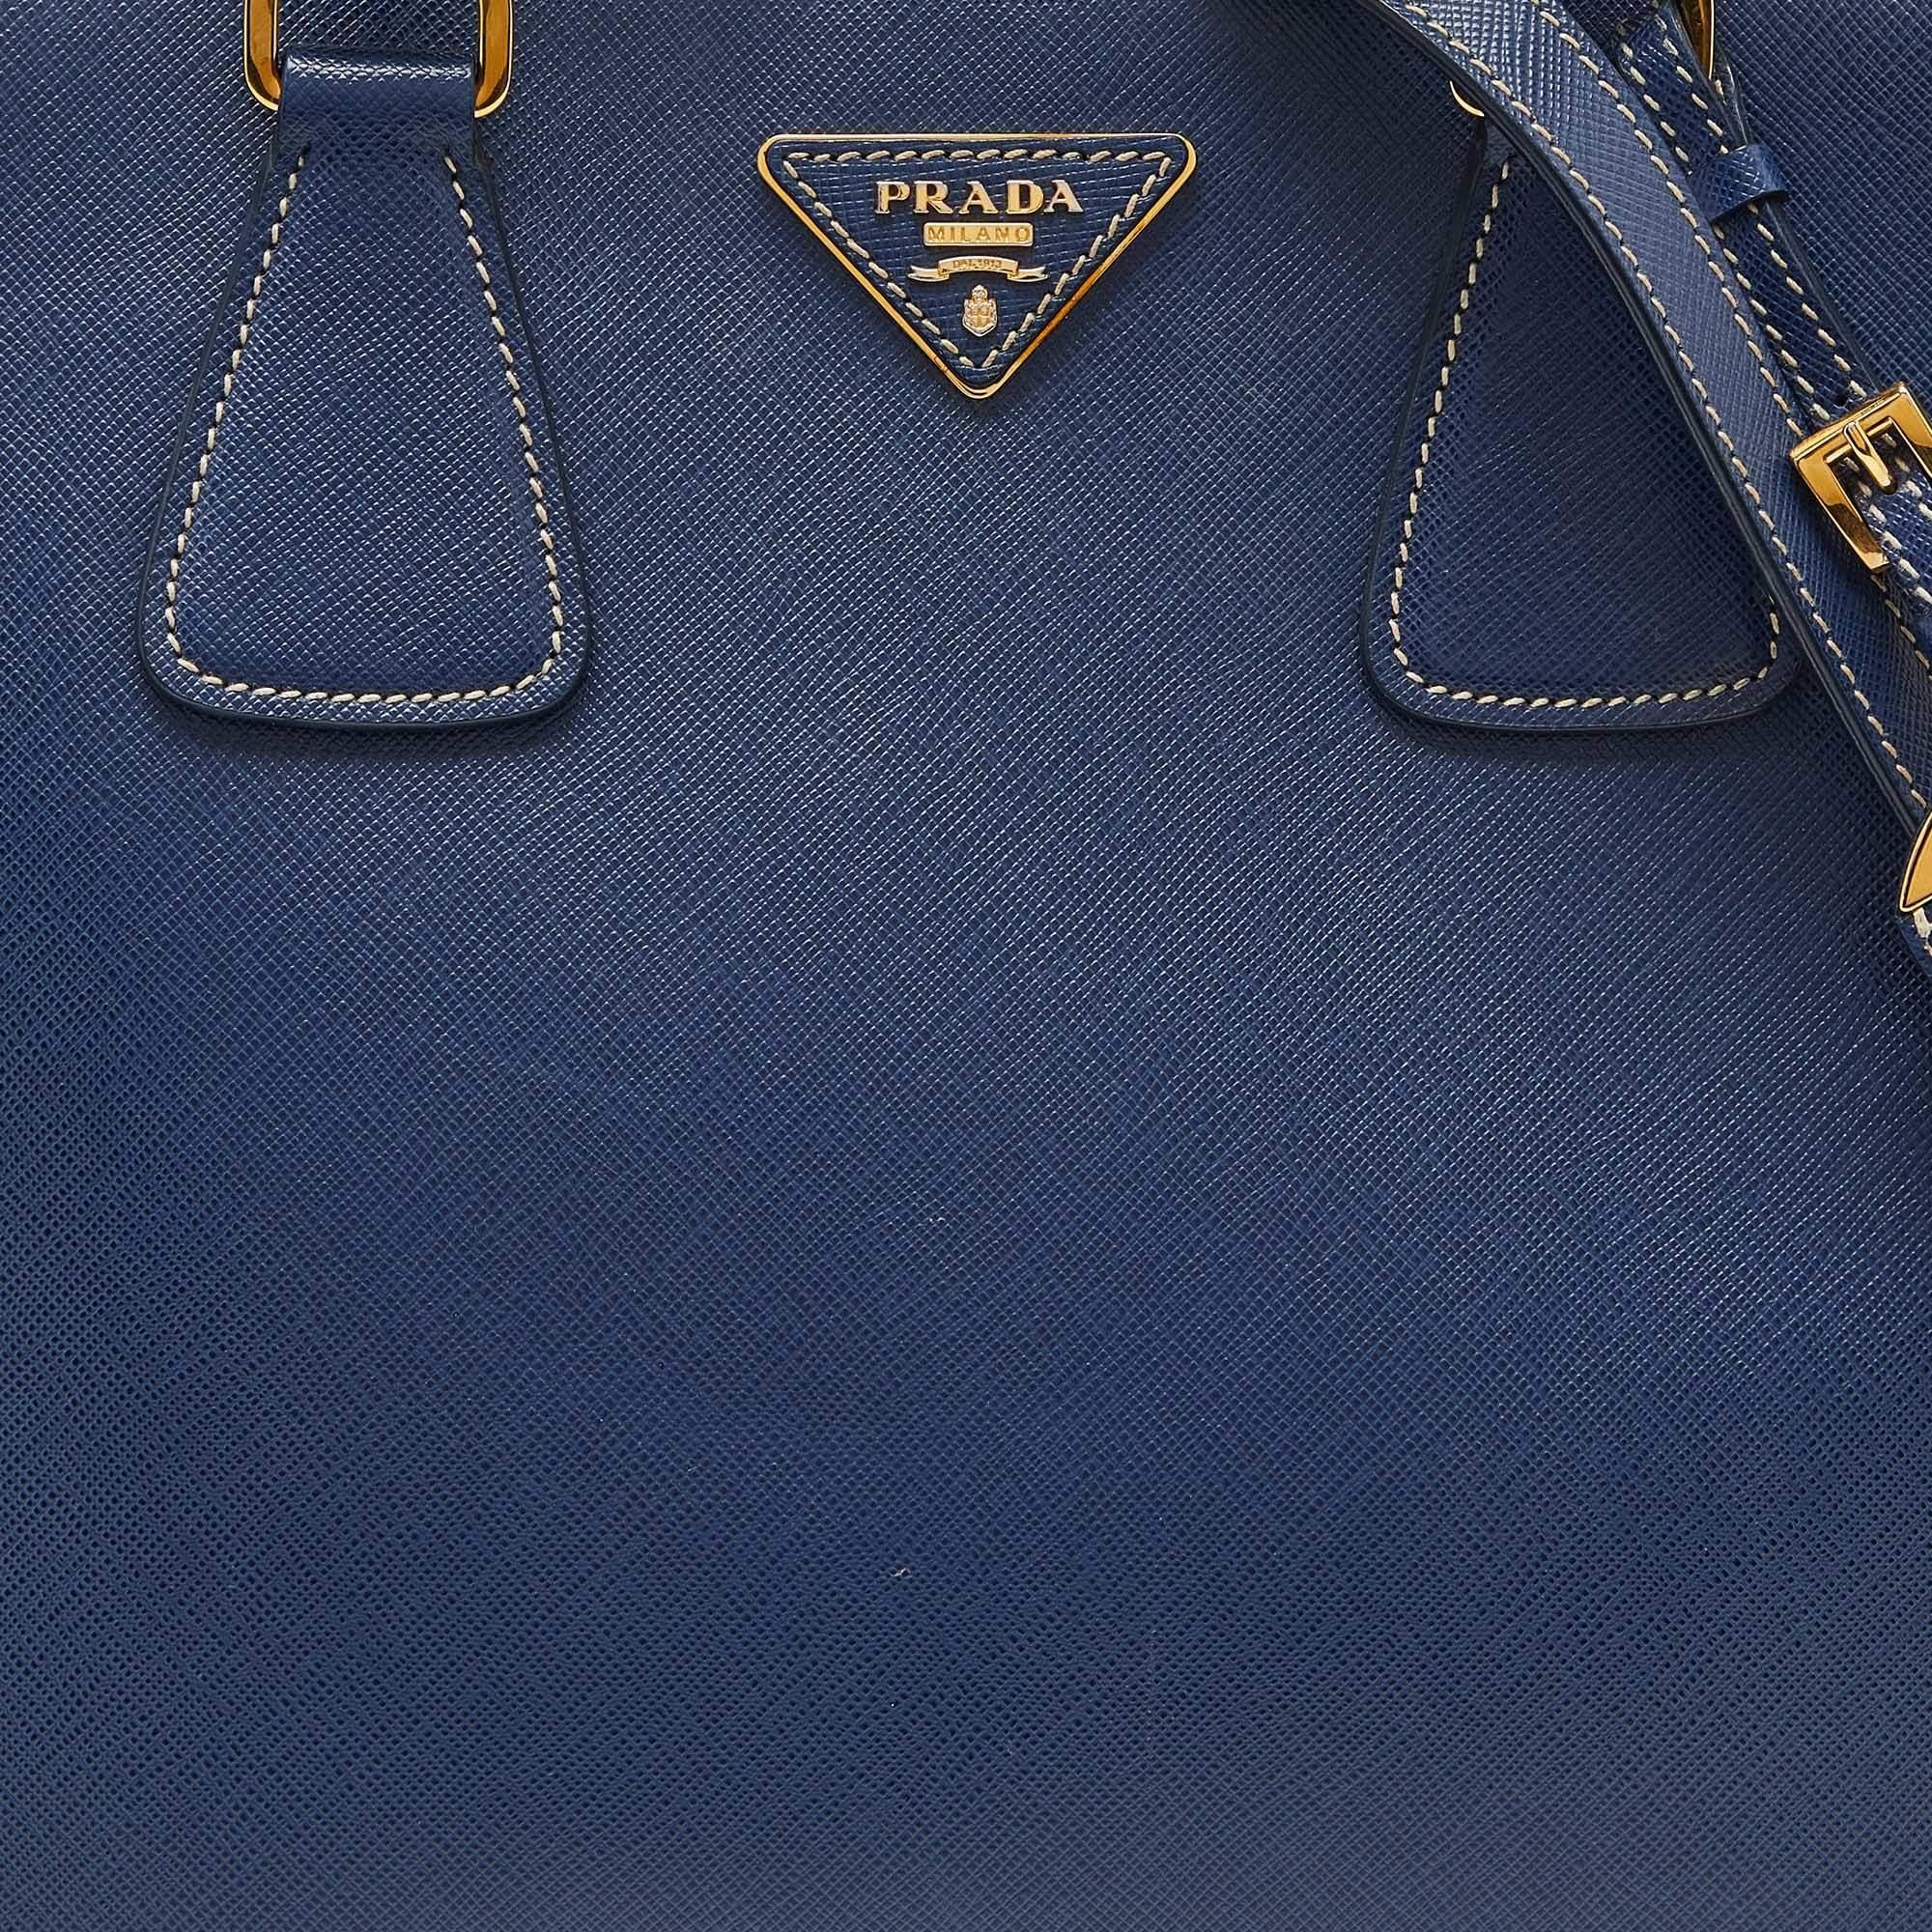 Prada Blue/Turquoise Saffiano Lux Leather Galleria Tote 2